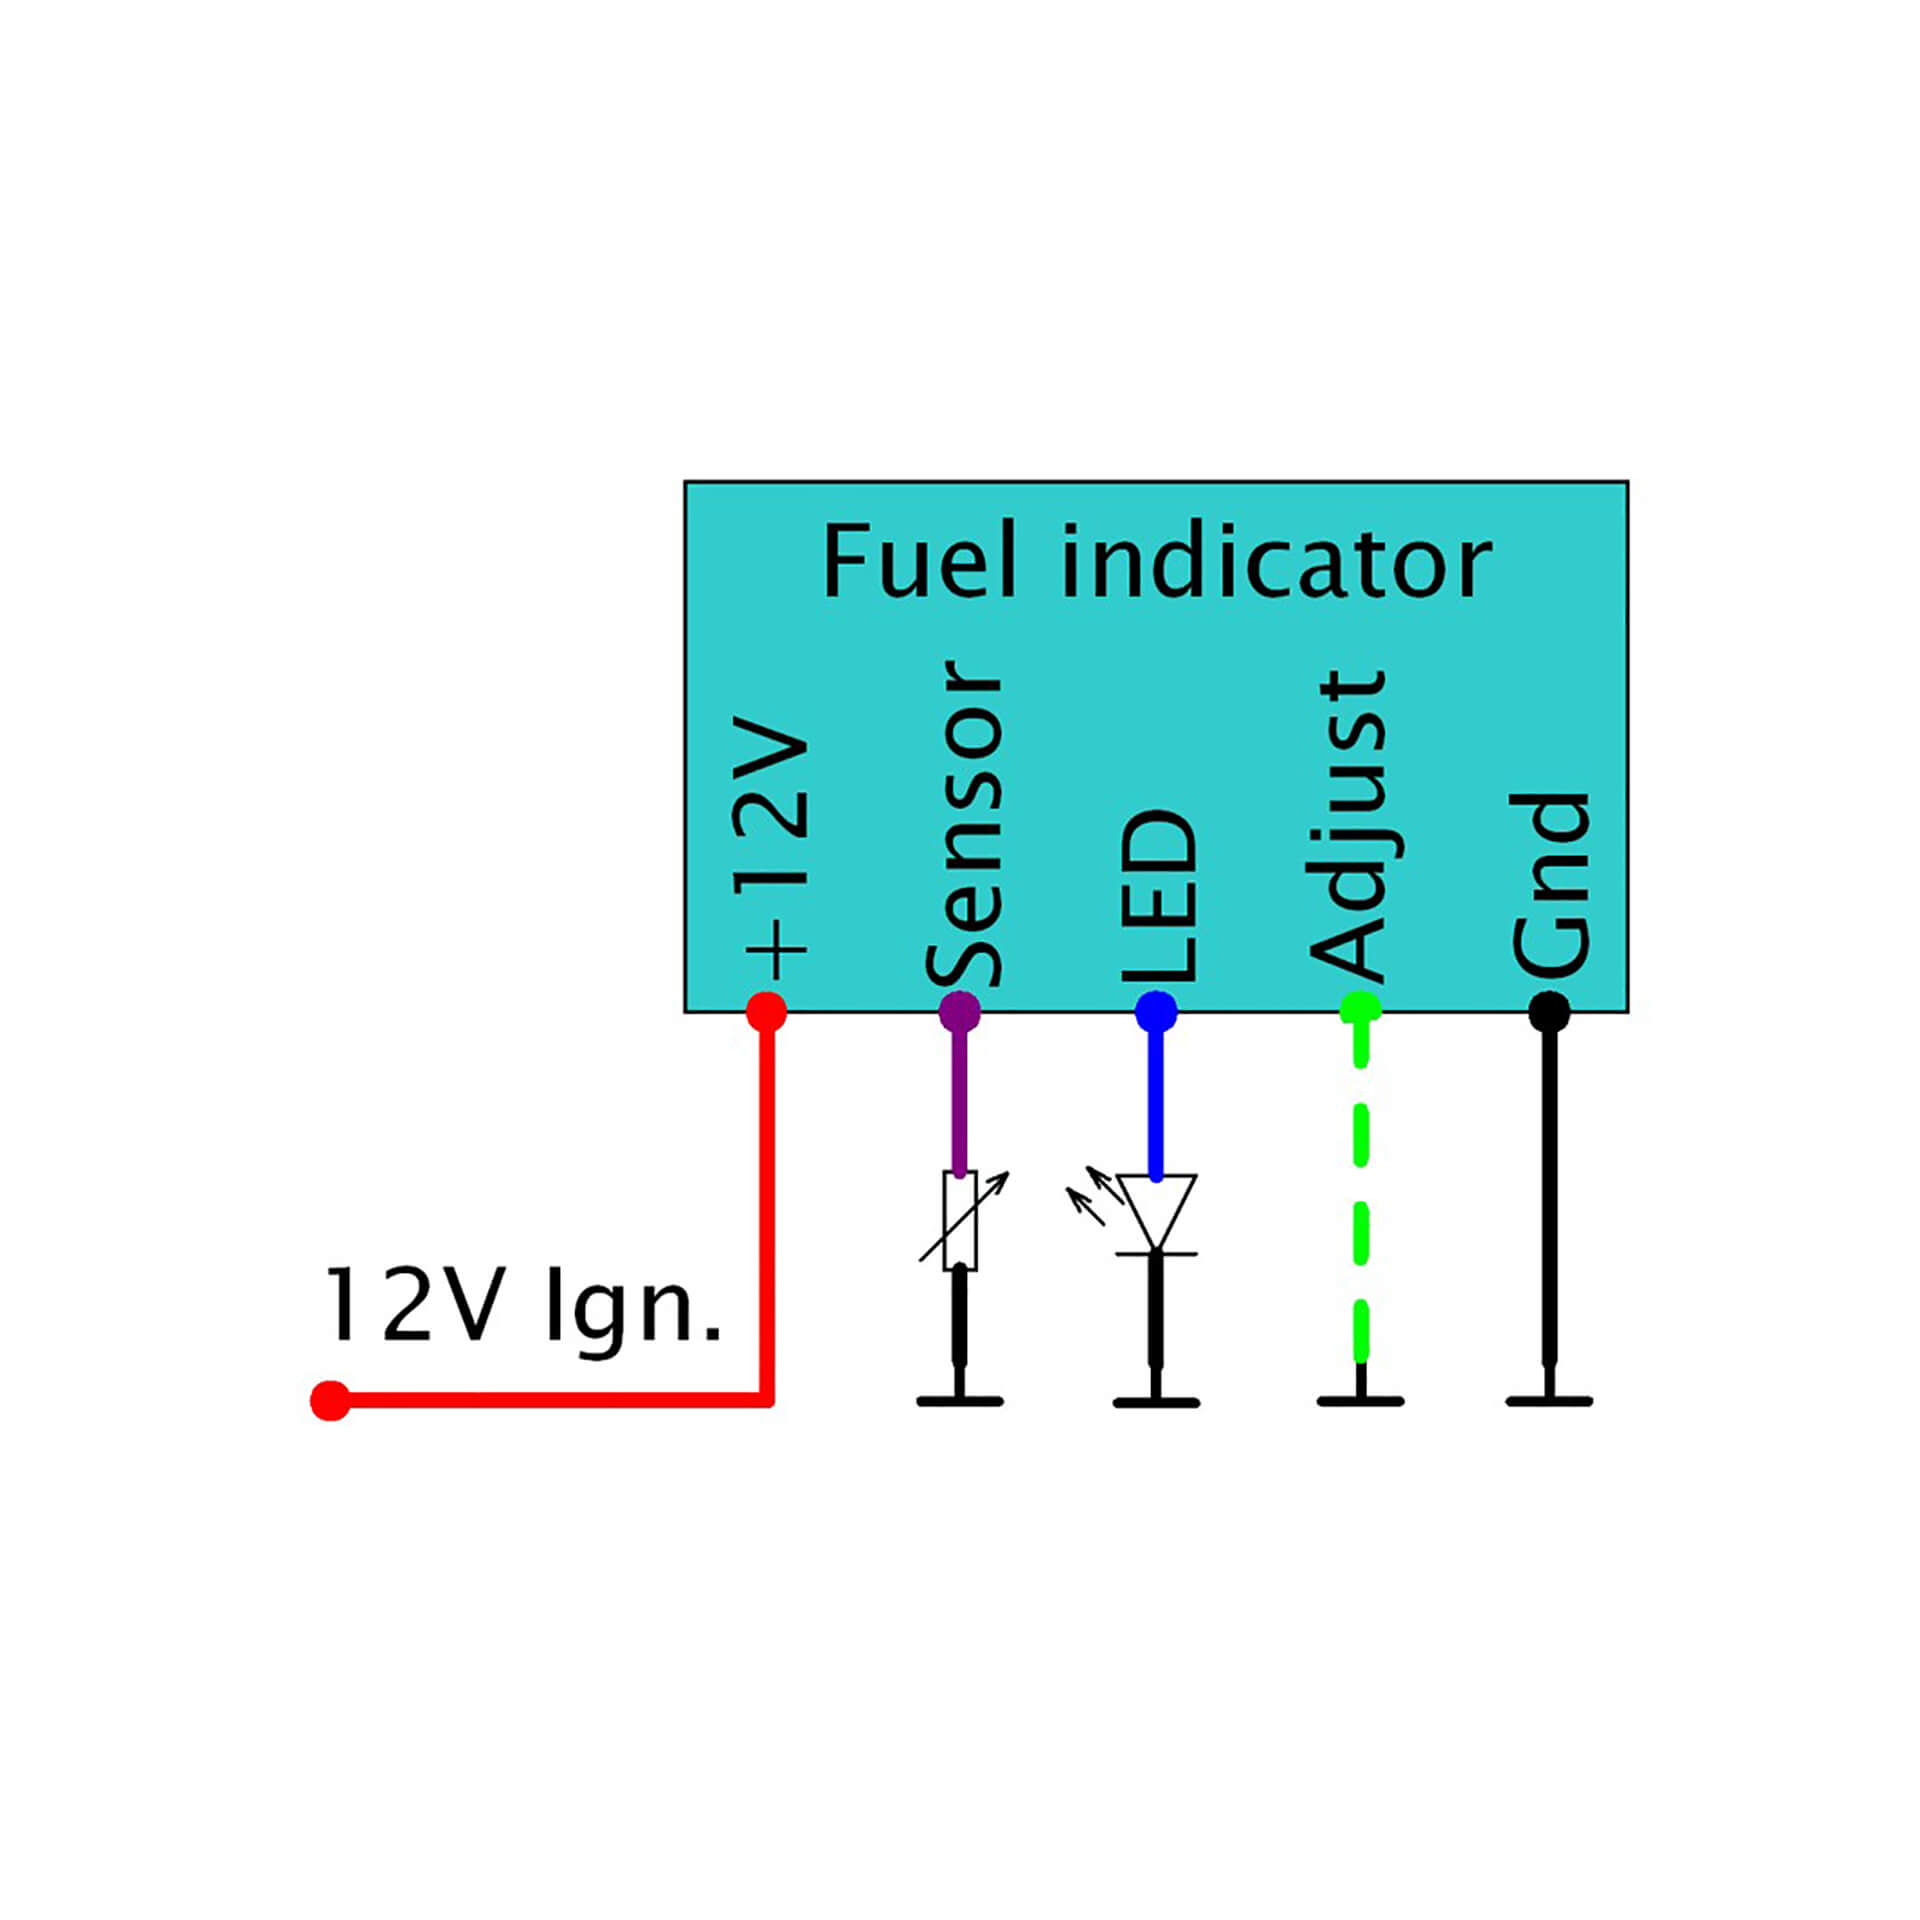 axel_joost Reserve tank indicator Fuel Indicator